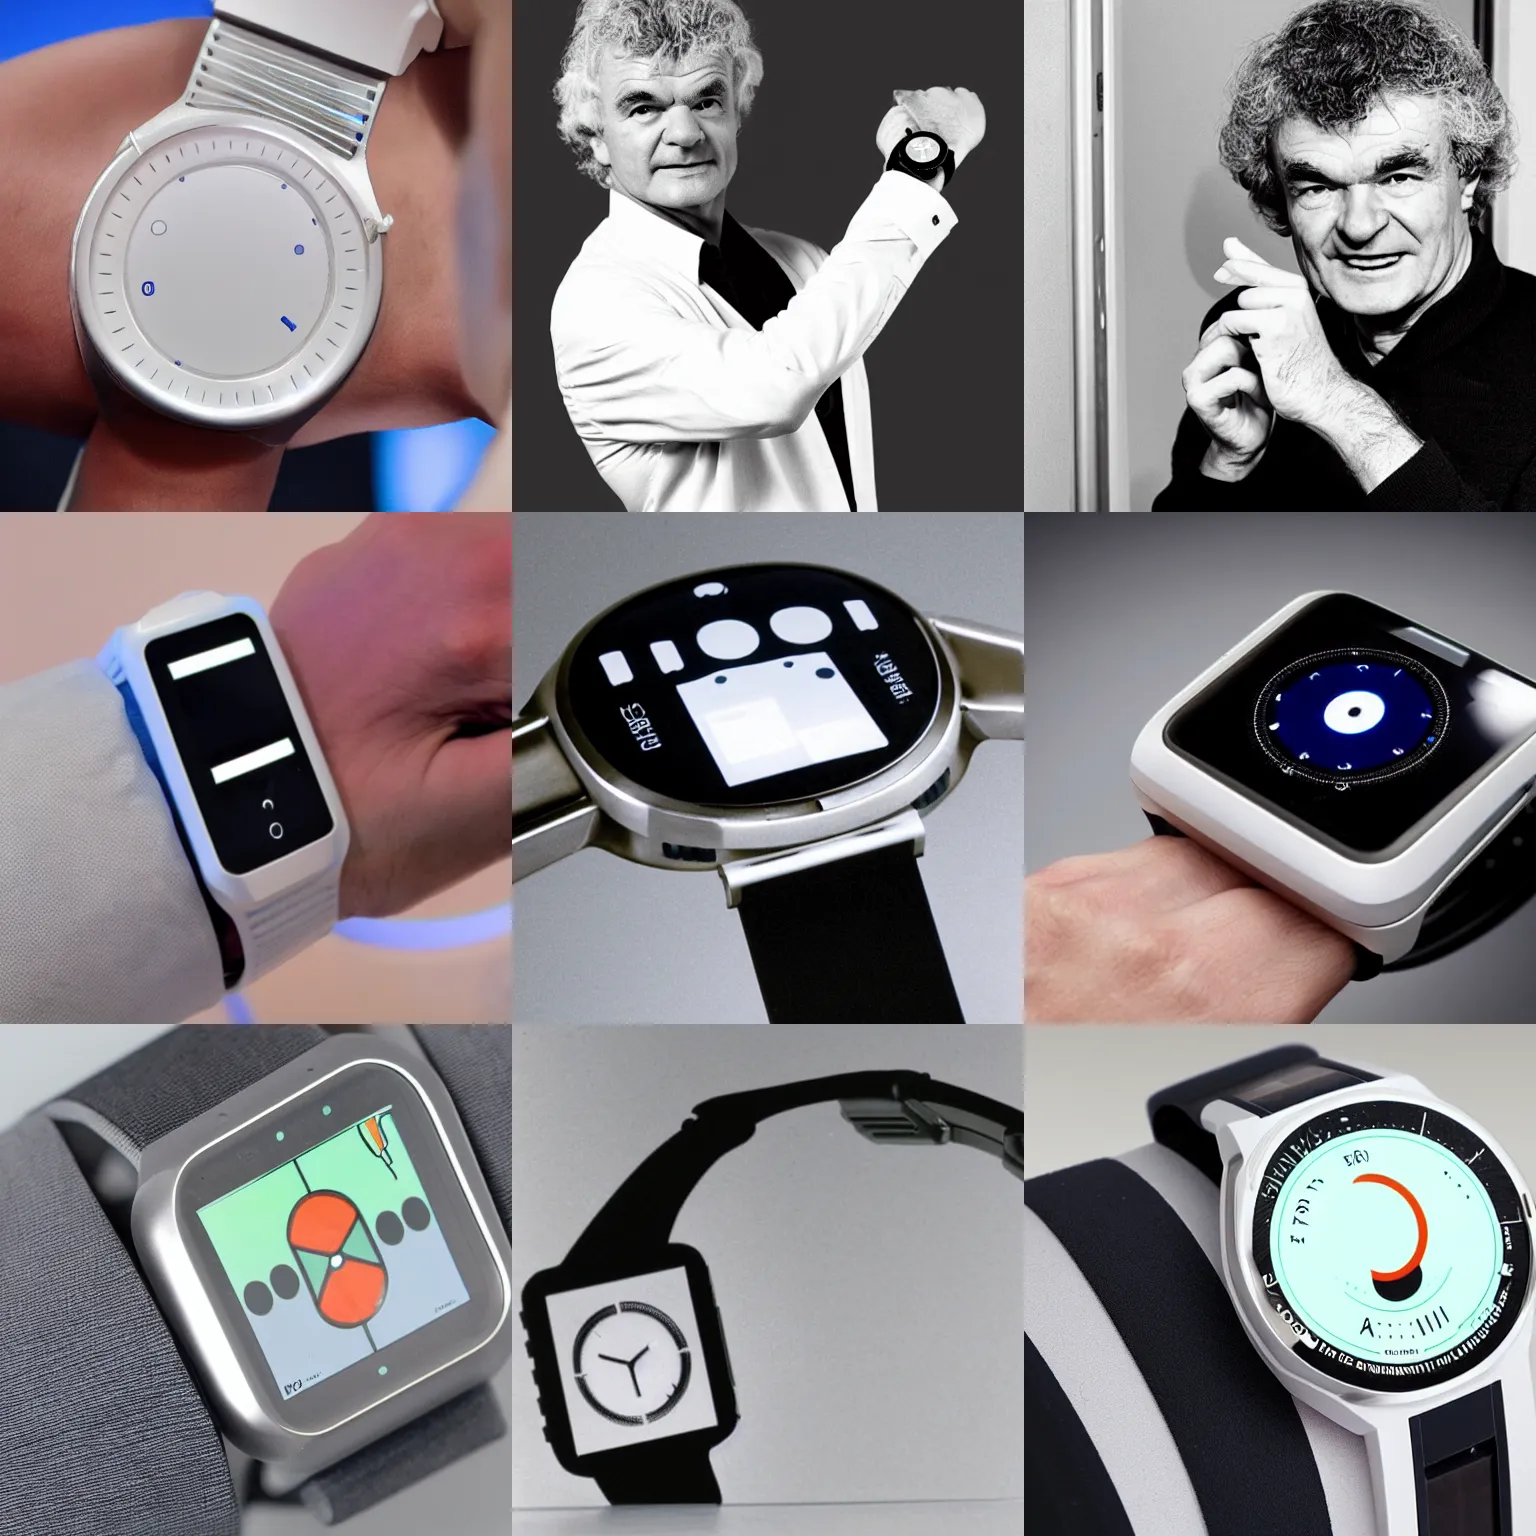 Prompt: hartmut esslinger prototype of a smart watch